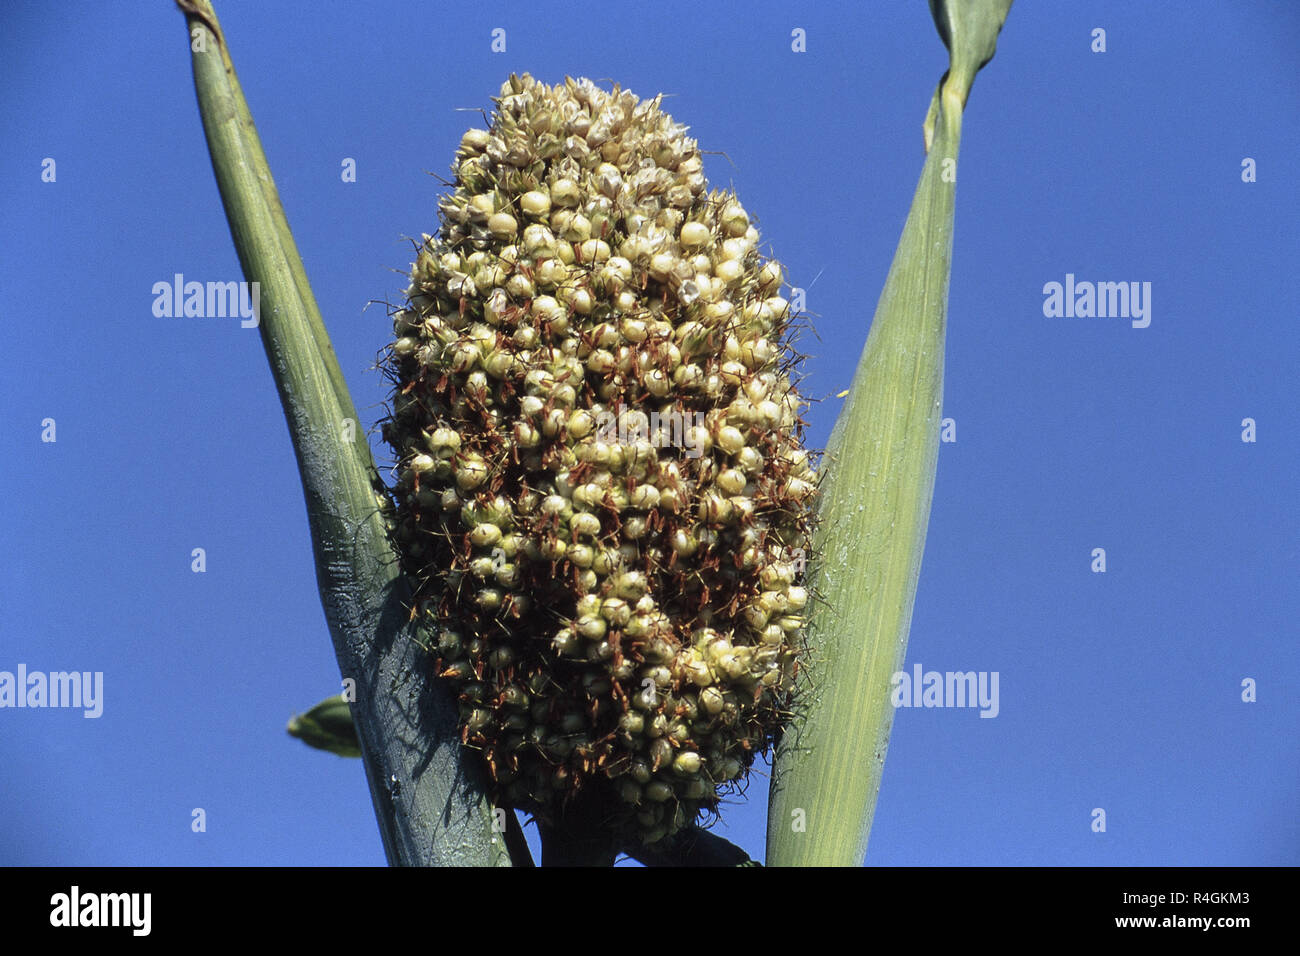 Jawar crop full of grains, Theur, District Pune, Maharashtra, India, Asia Stock Photo